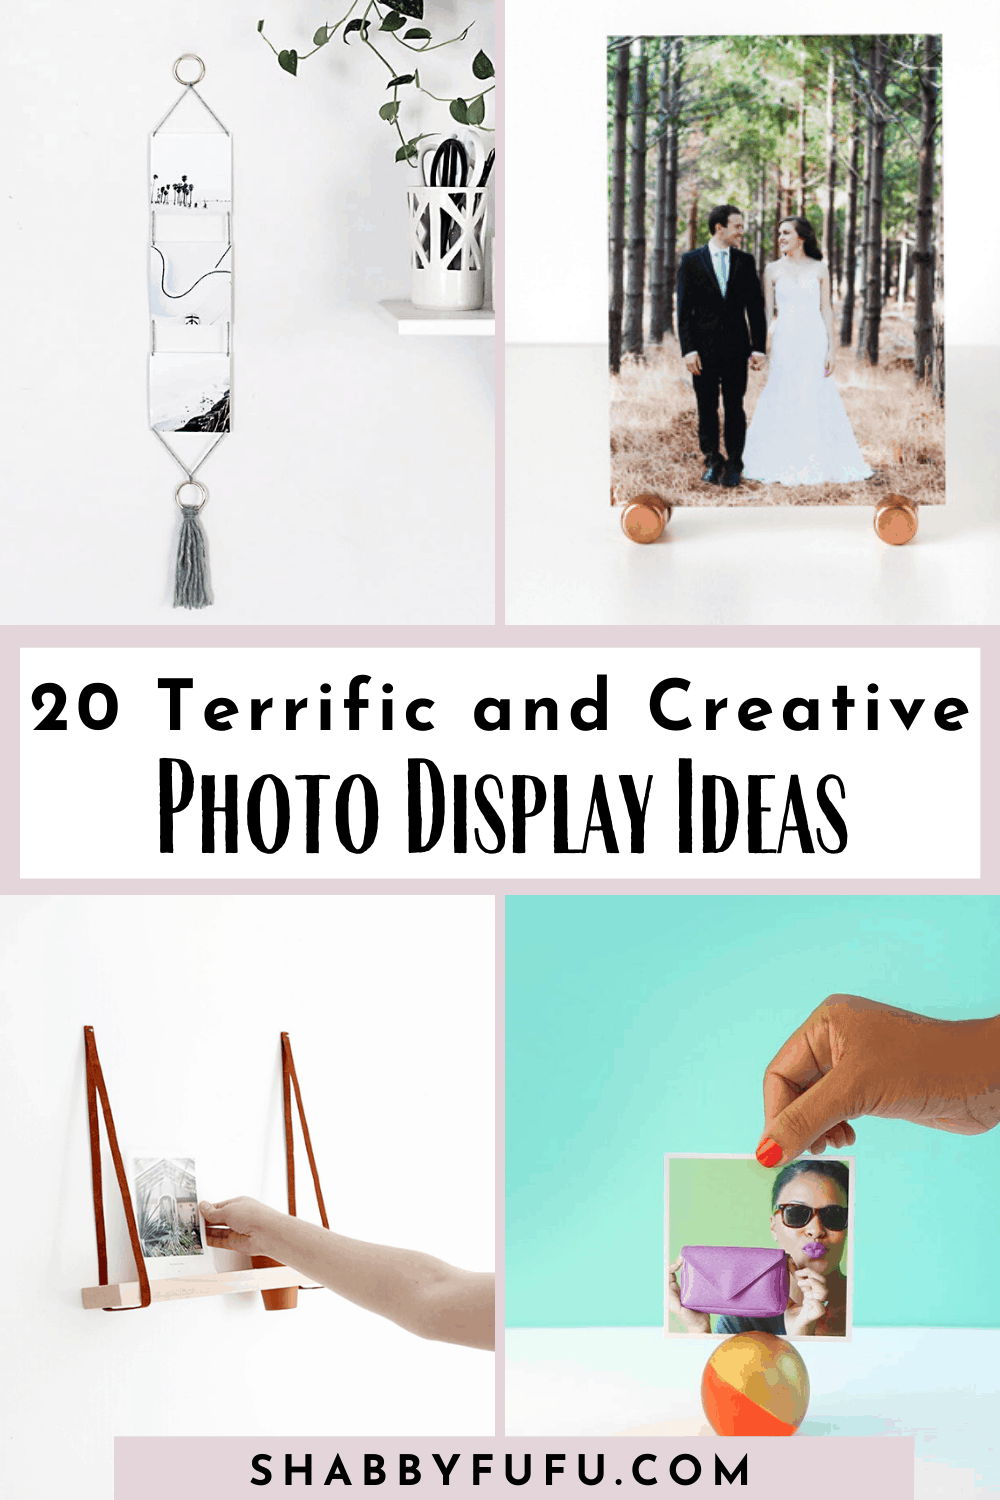 Twenty Terrific and Creative Photo Display Ideas